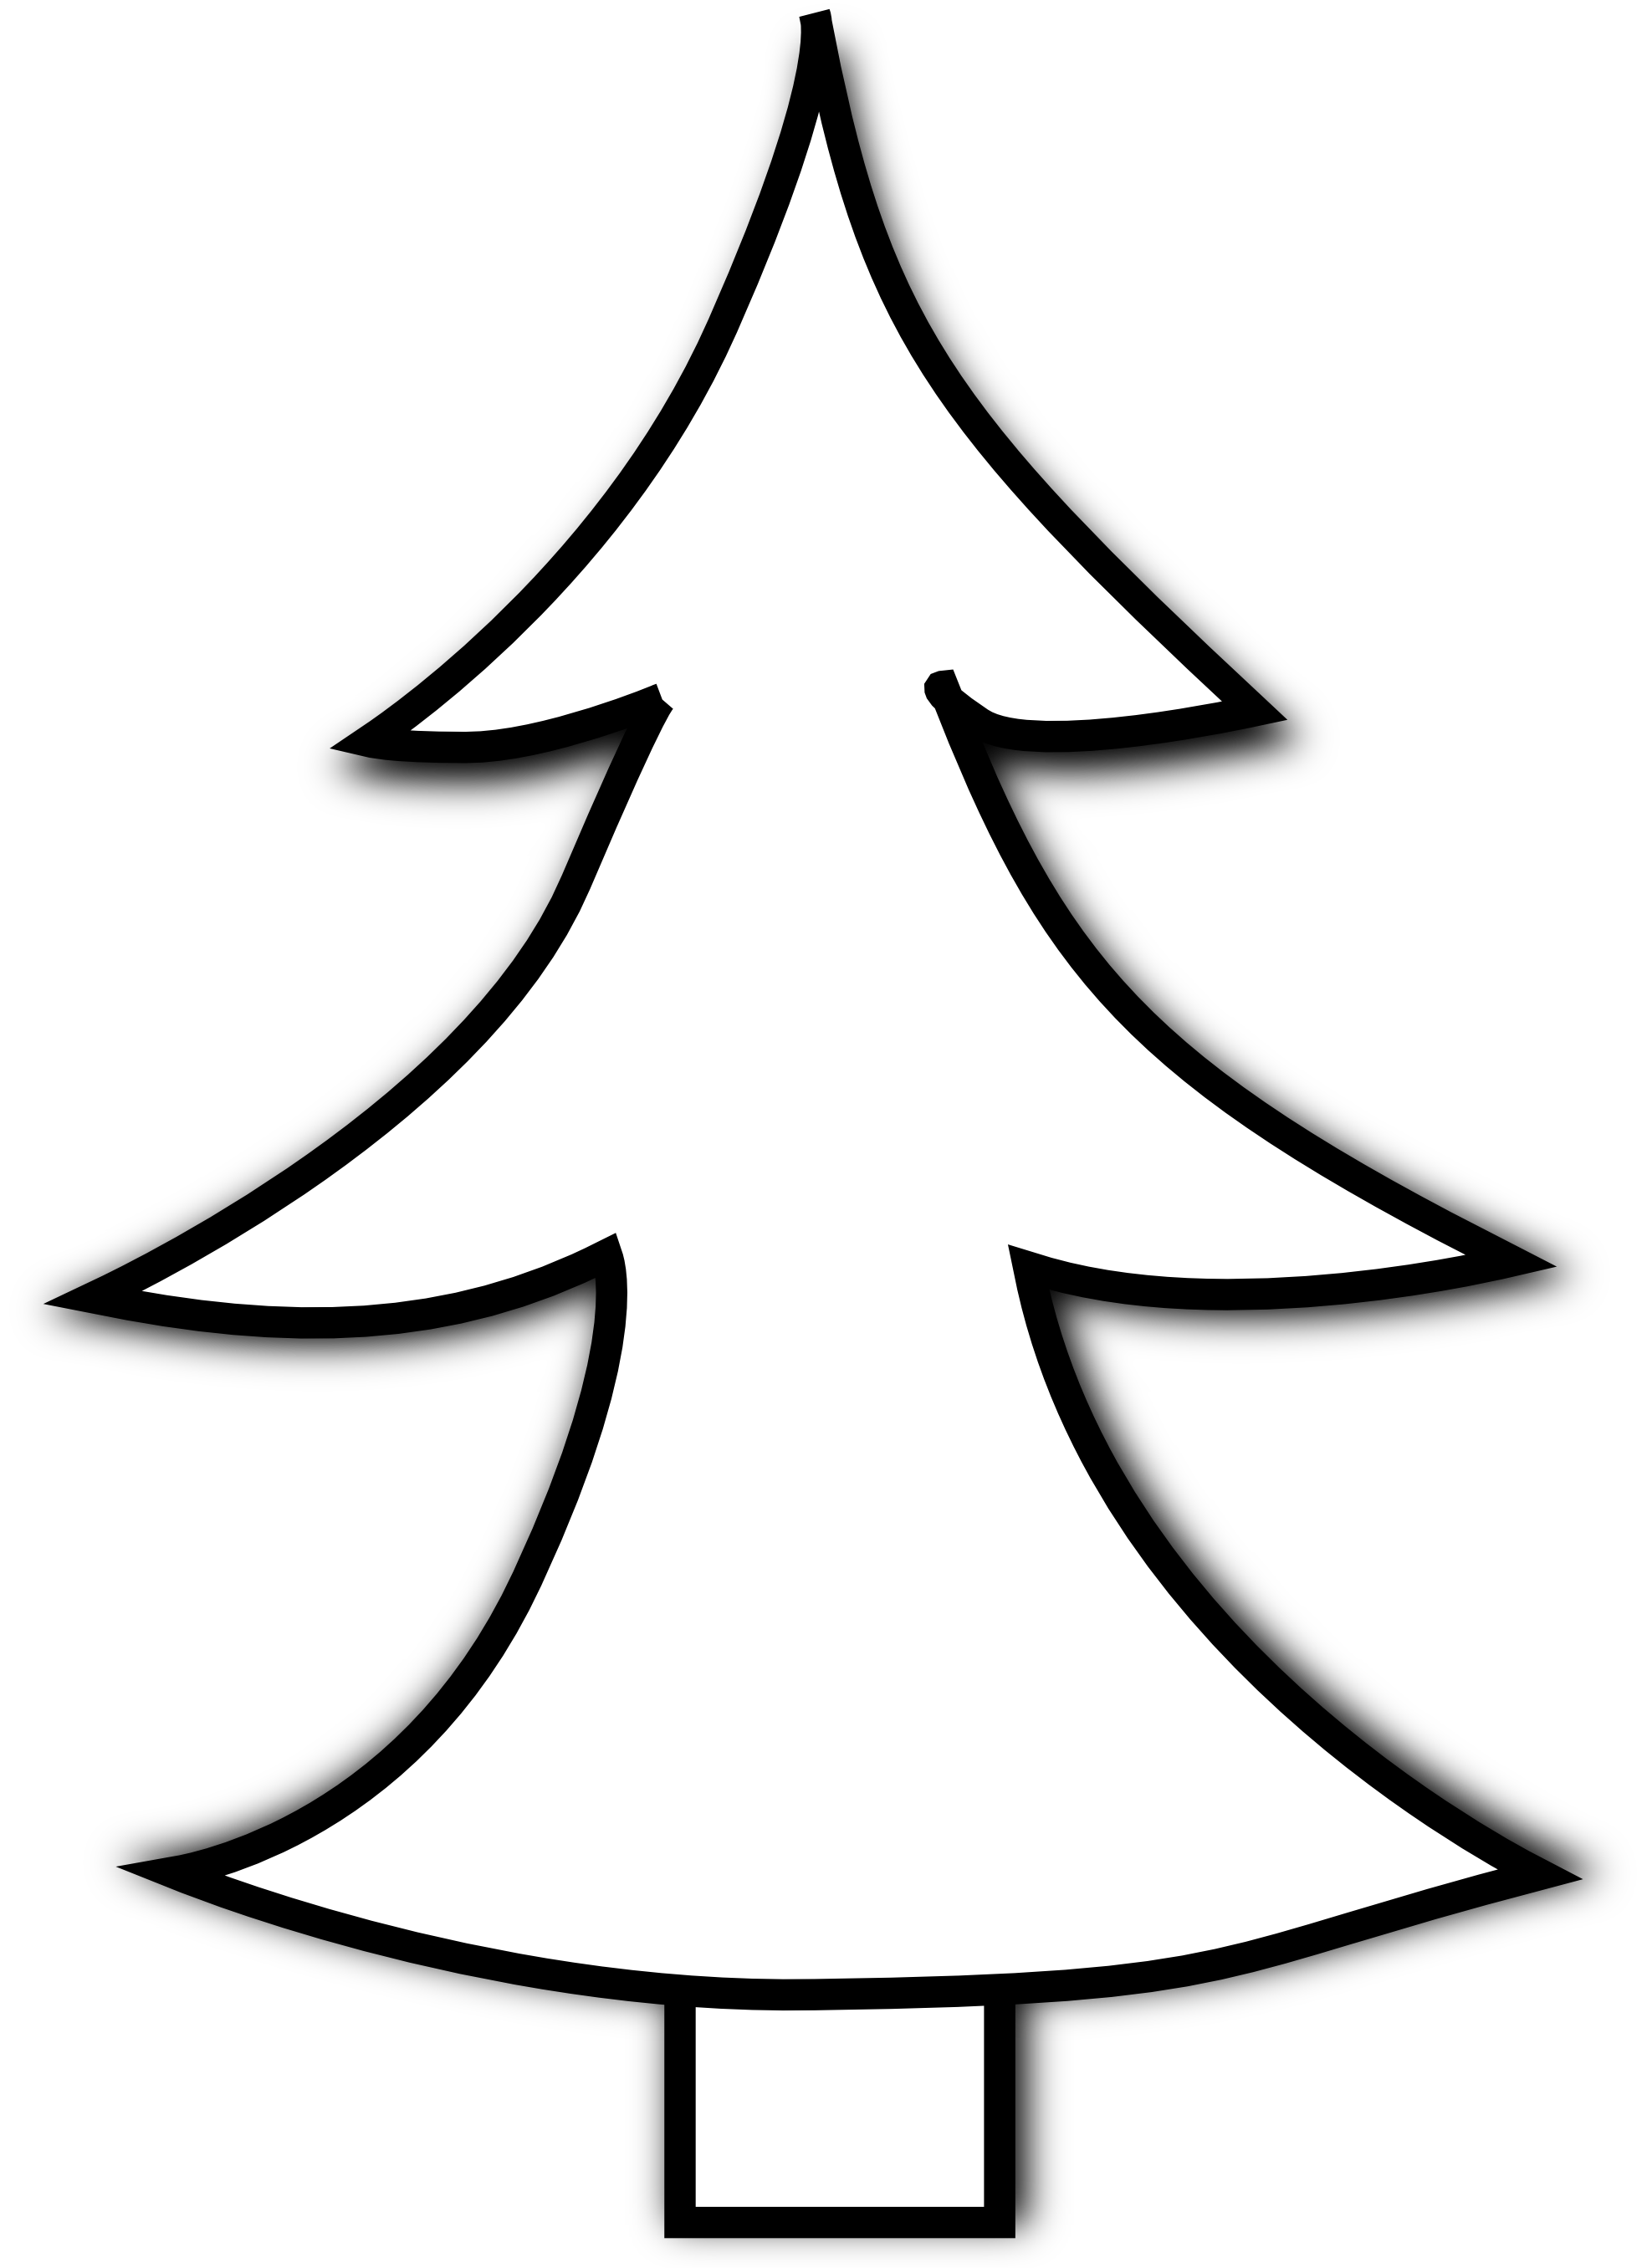 Christmas Tree Clip Art Black - Christmas Tree Clip Art Black And White